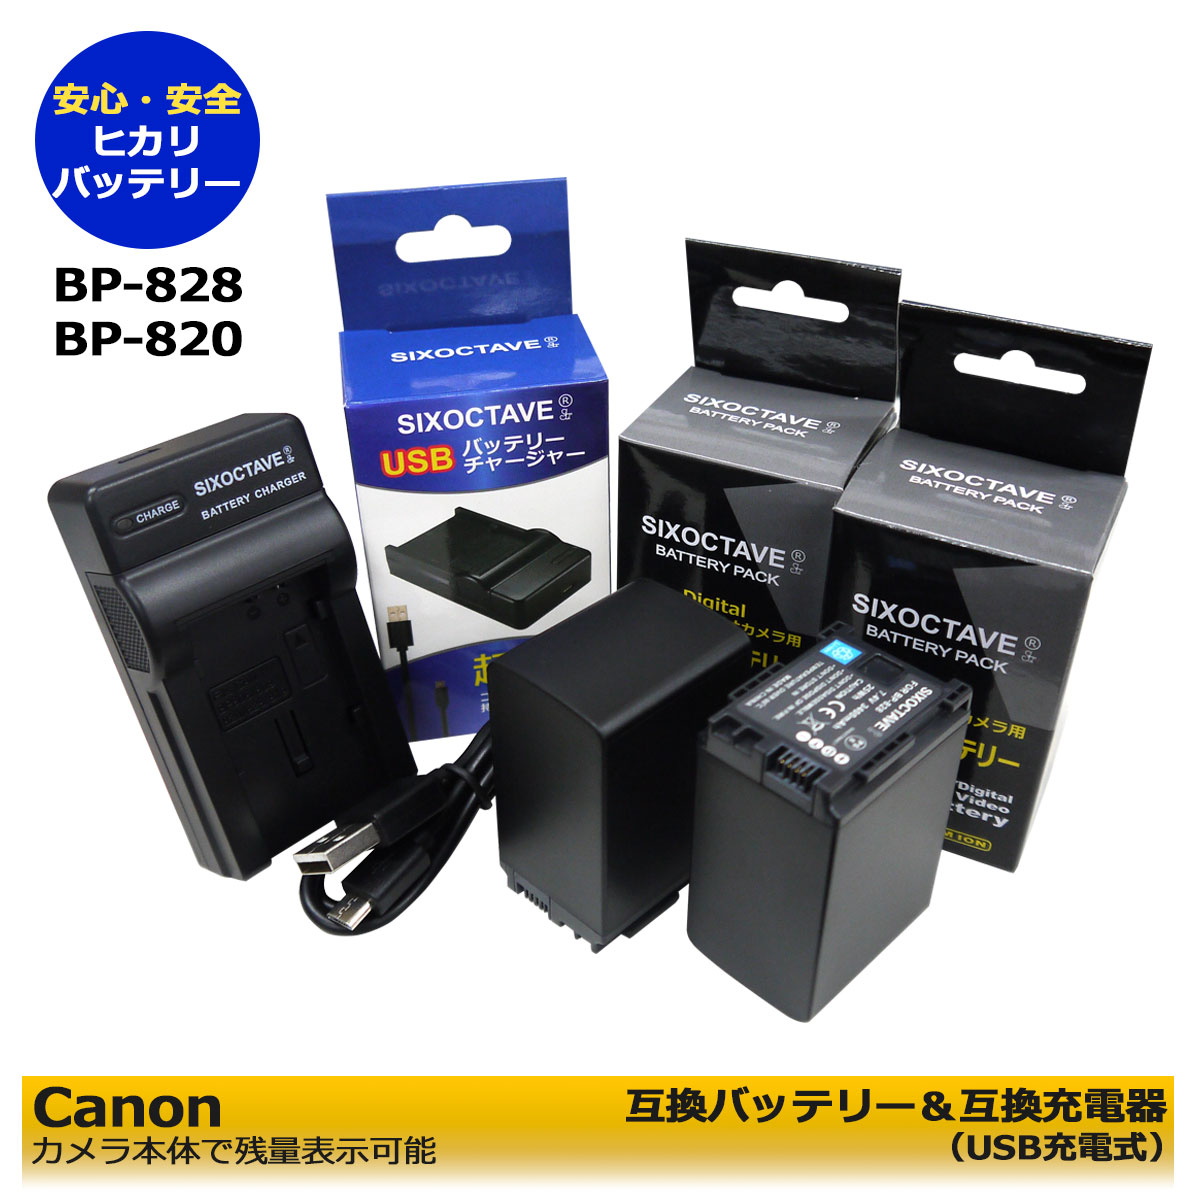 NEW ARRIVAL Canon バッテリー BP-820カメラ:カメラアクセサリー:カメラ用バッテリー 通販 